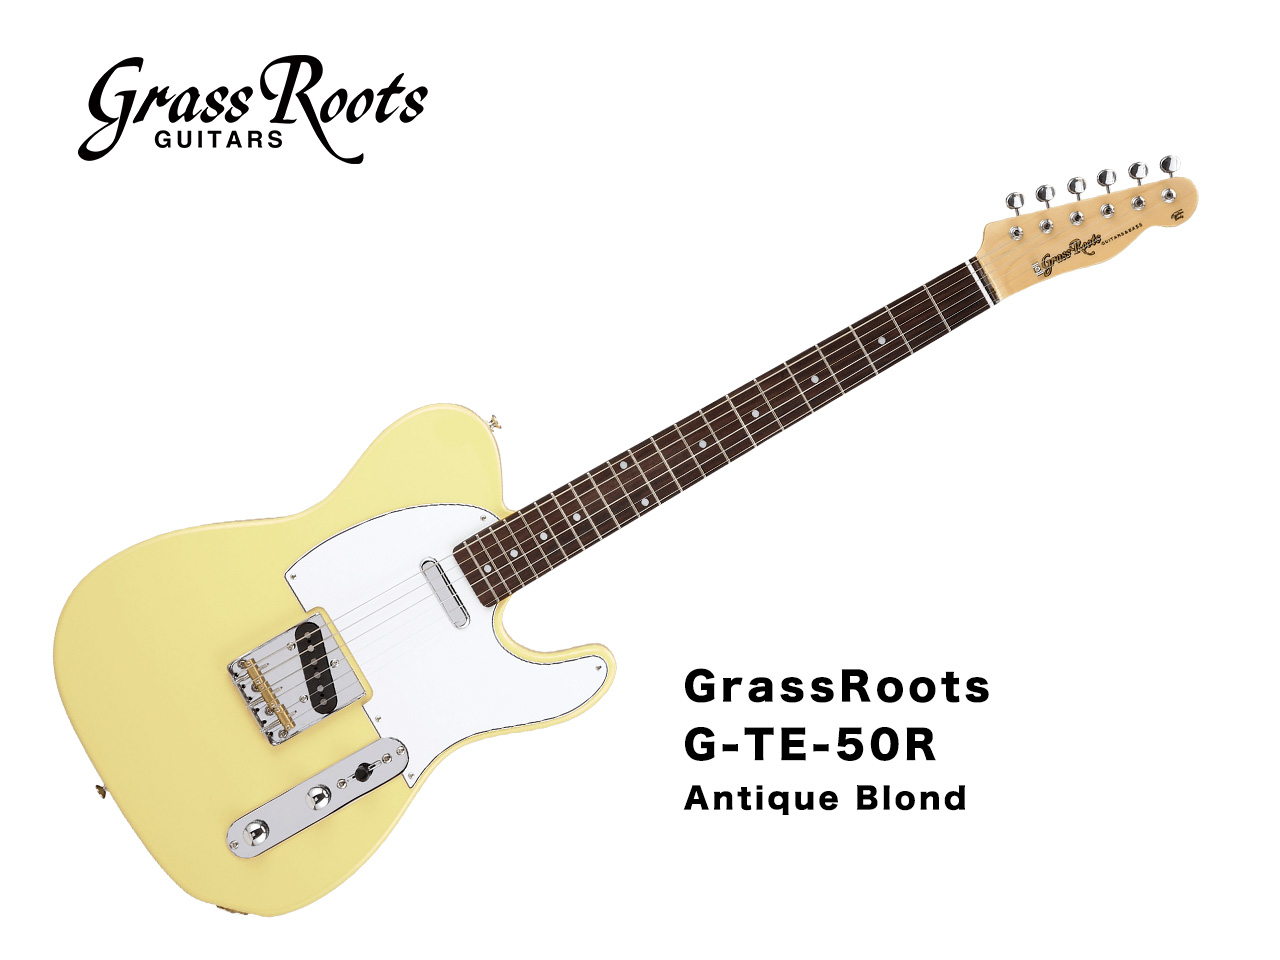 GrassRoots G-TE-50R tele